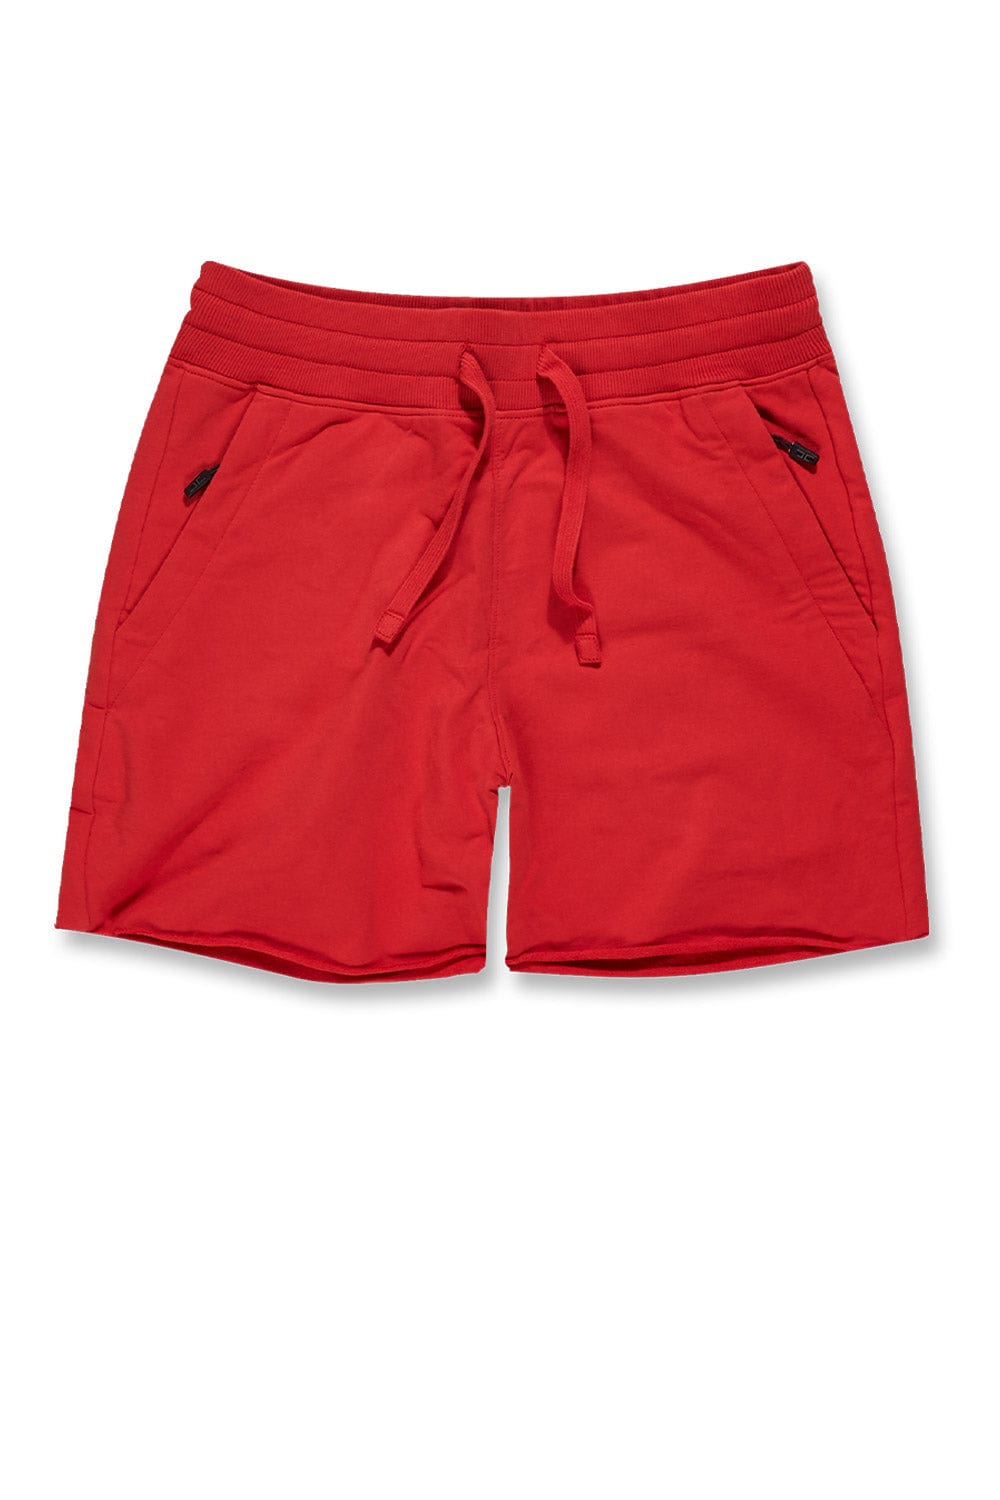 Athletic - Summer Breeze Knit Shorts